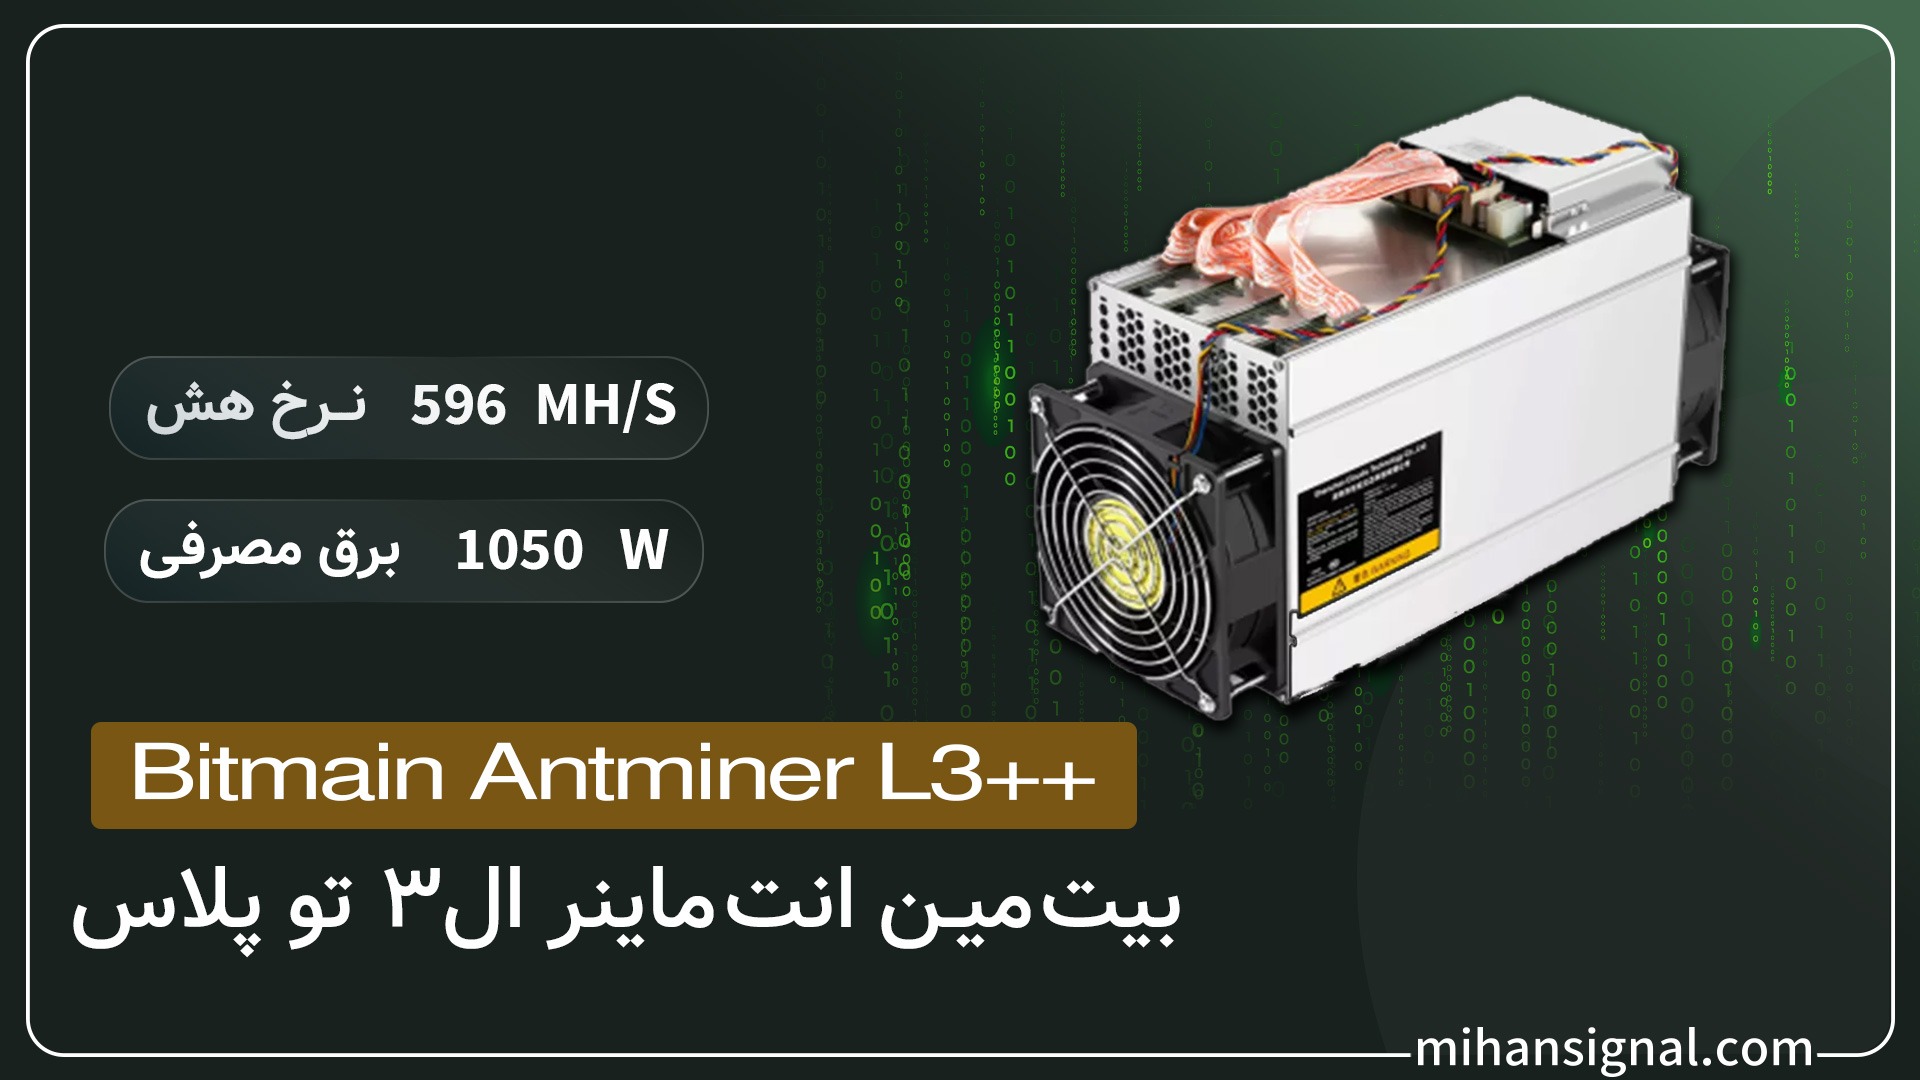 دستگاه ماینر ++Bitmain Antminer L3